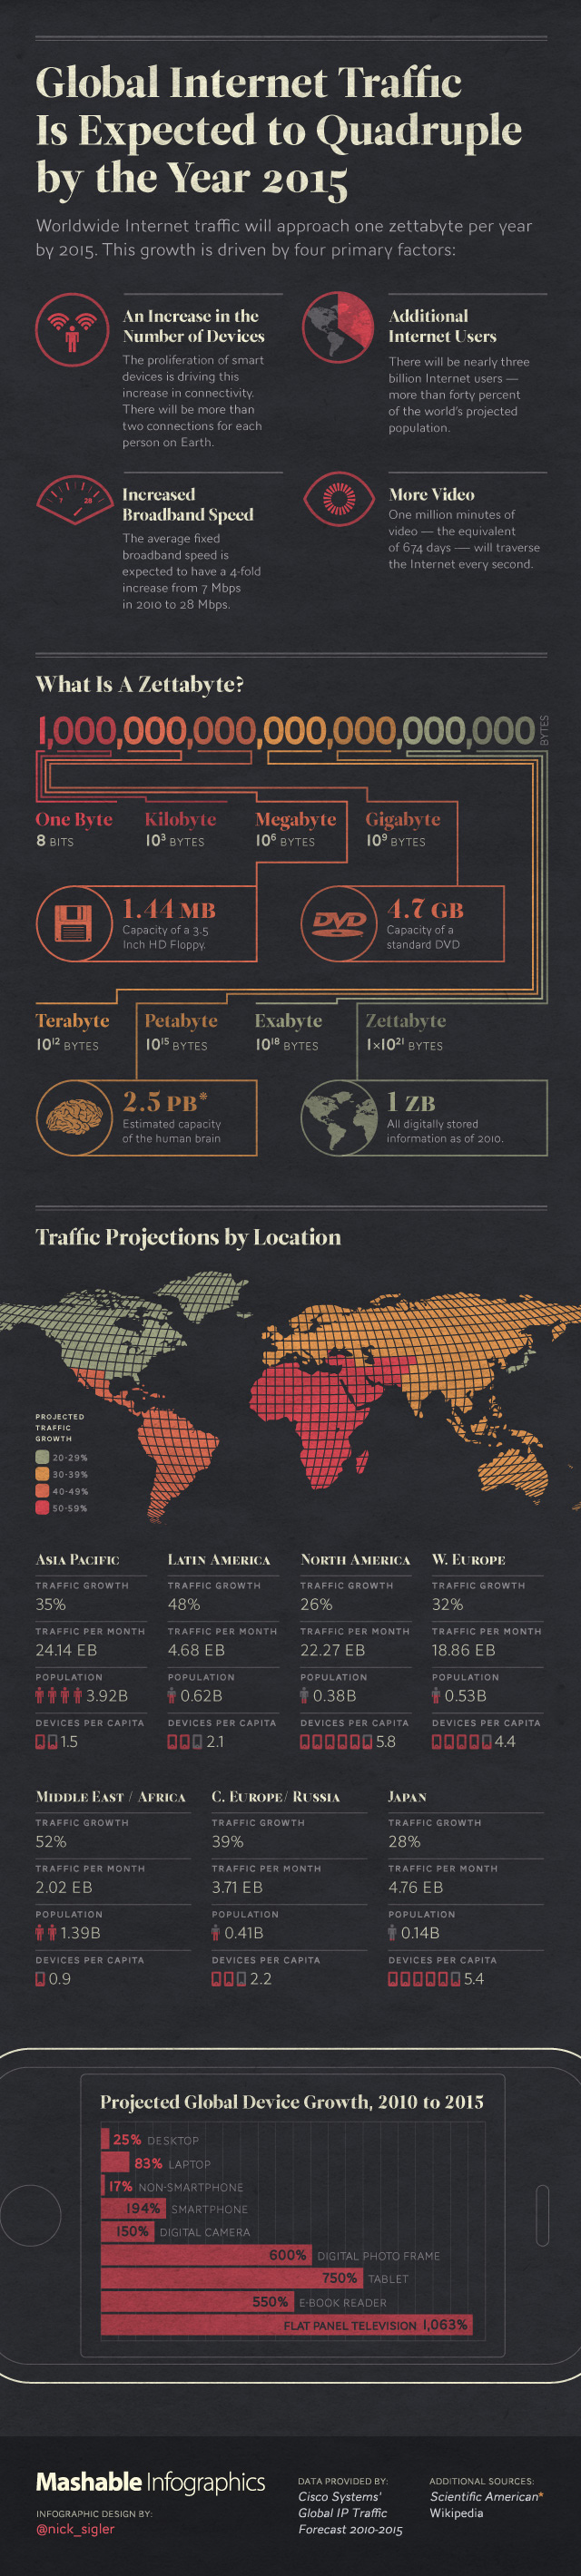 global-internet-traffic-mashable-infographics-640